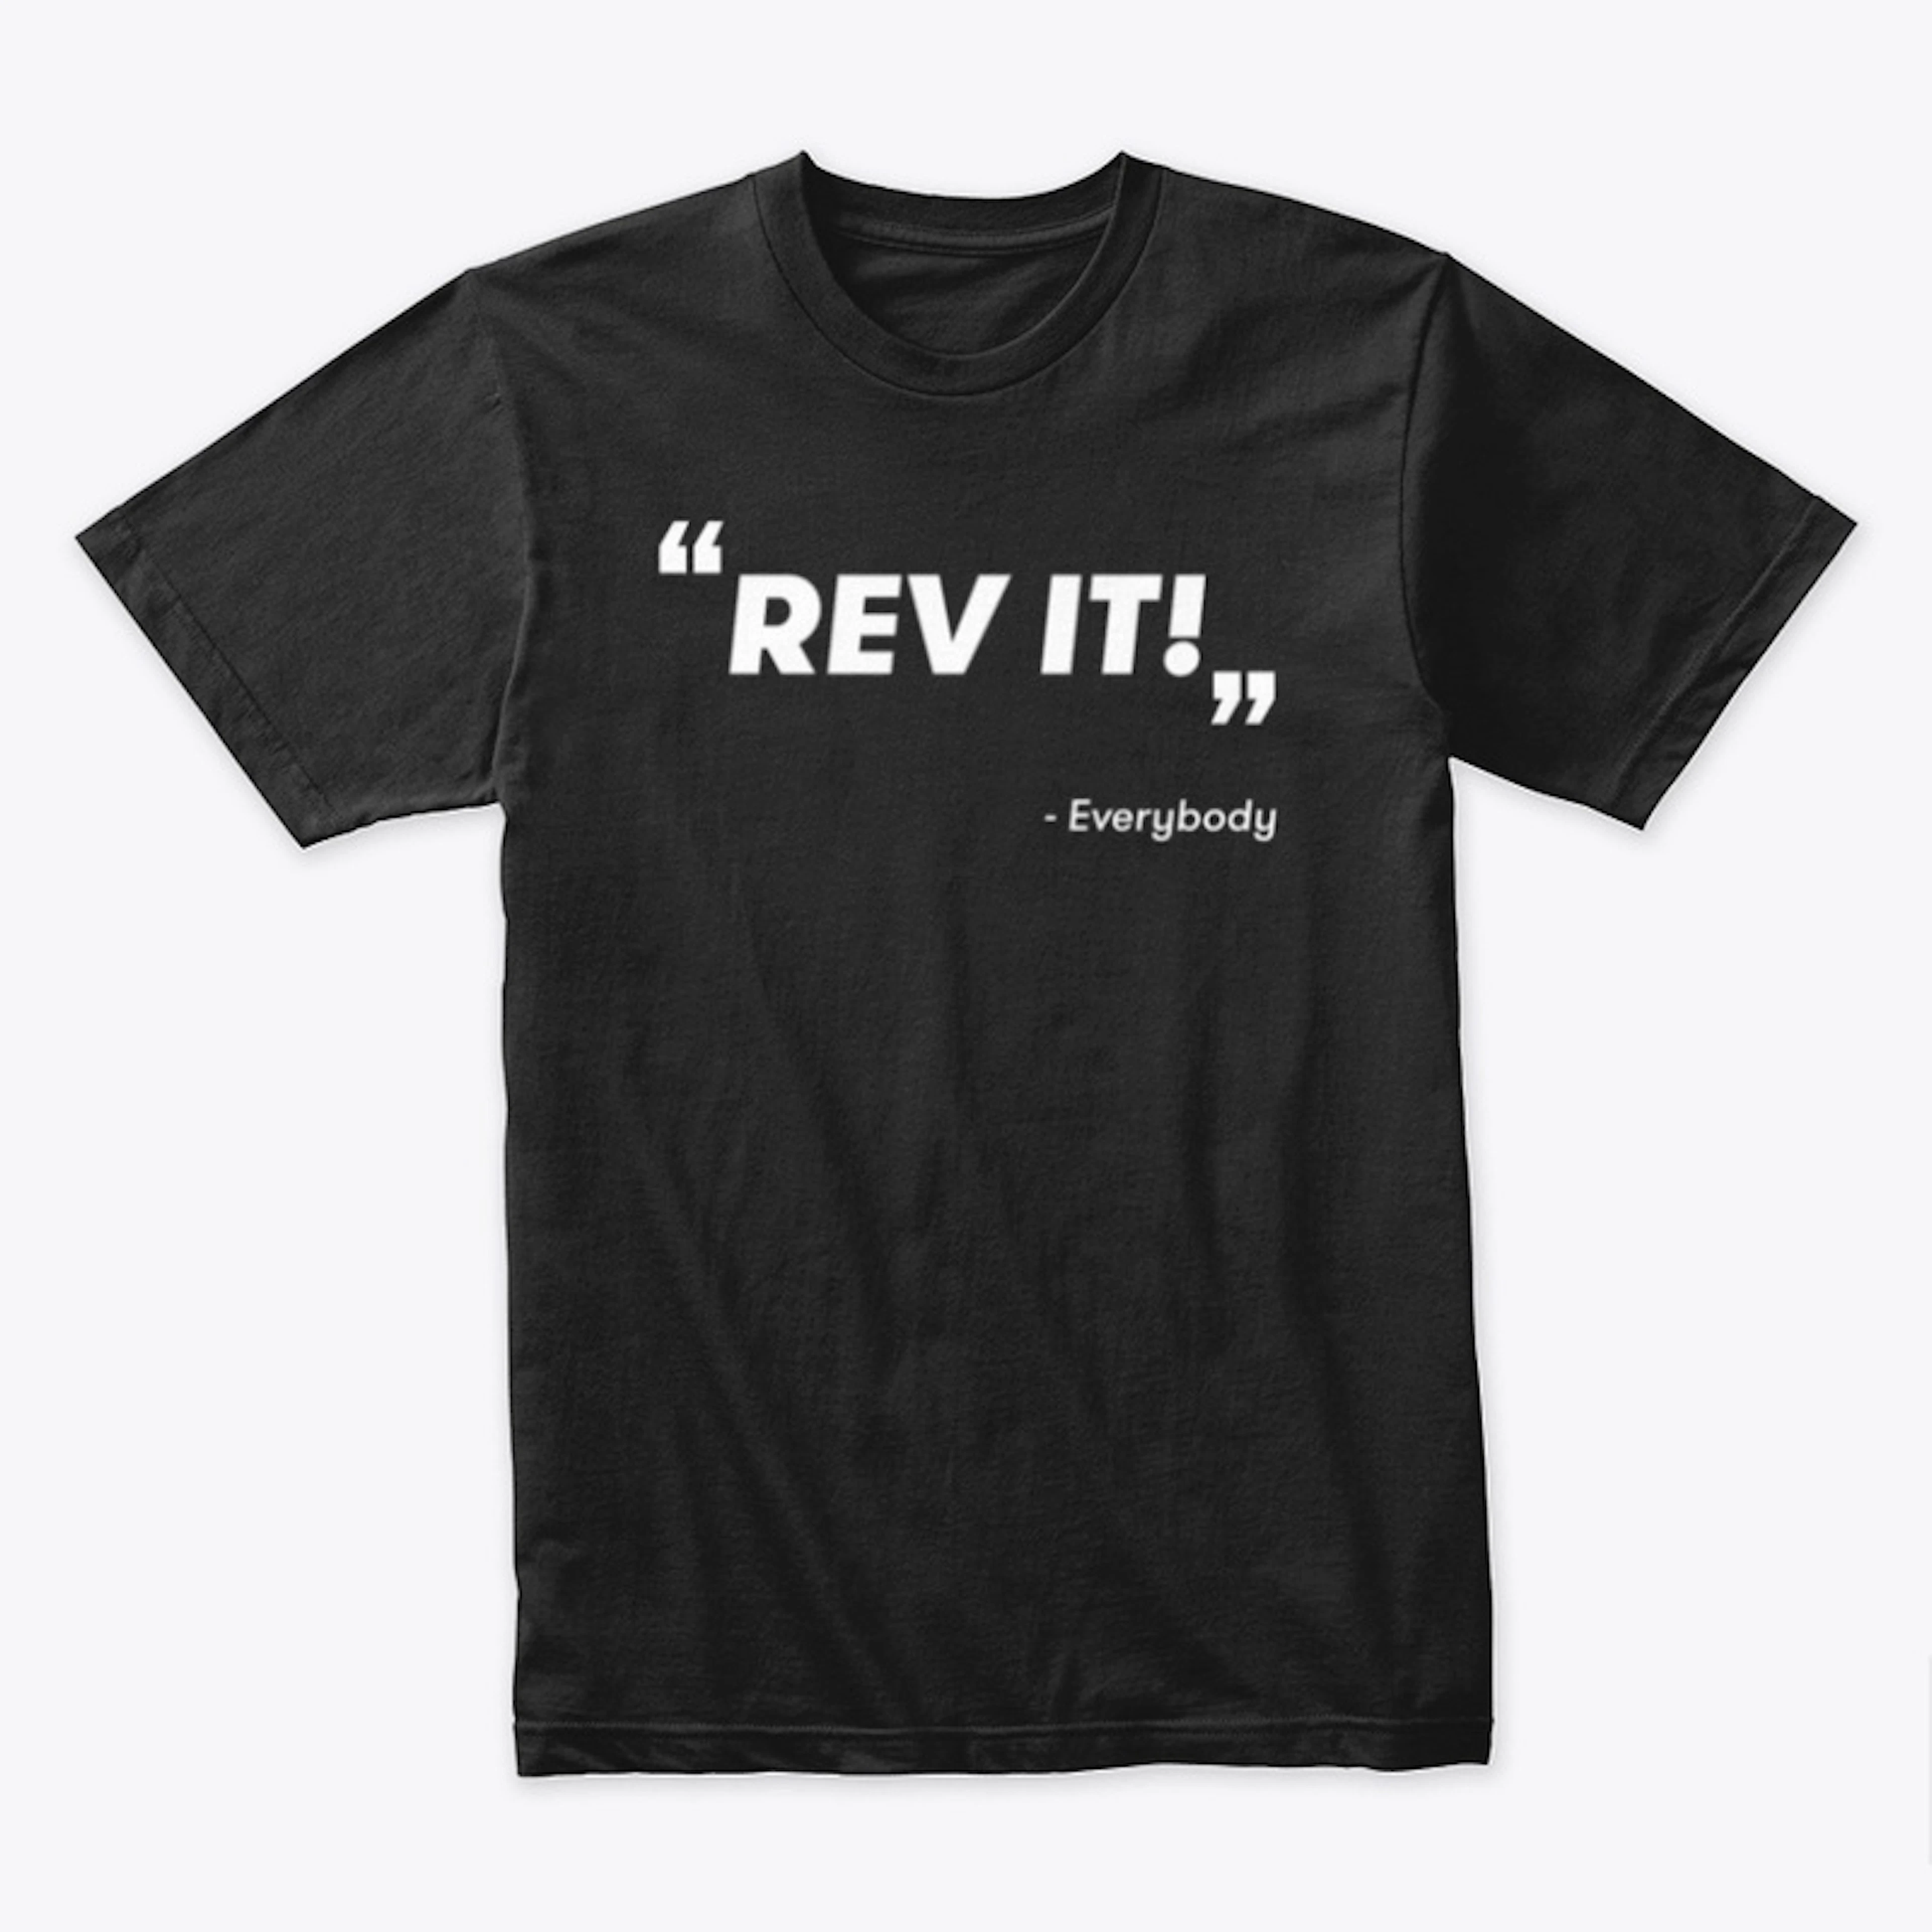 Rev it!